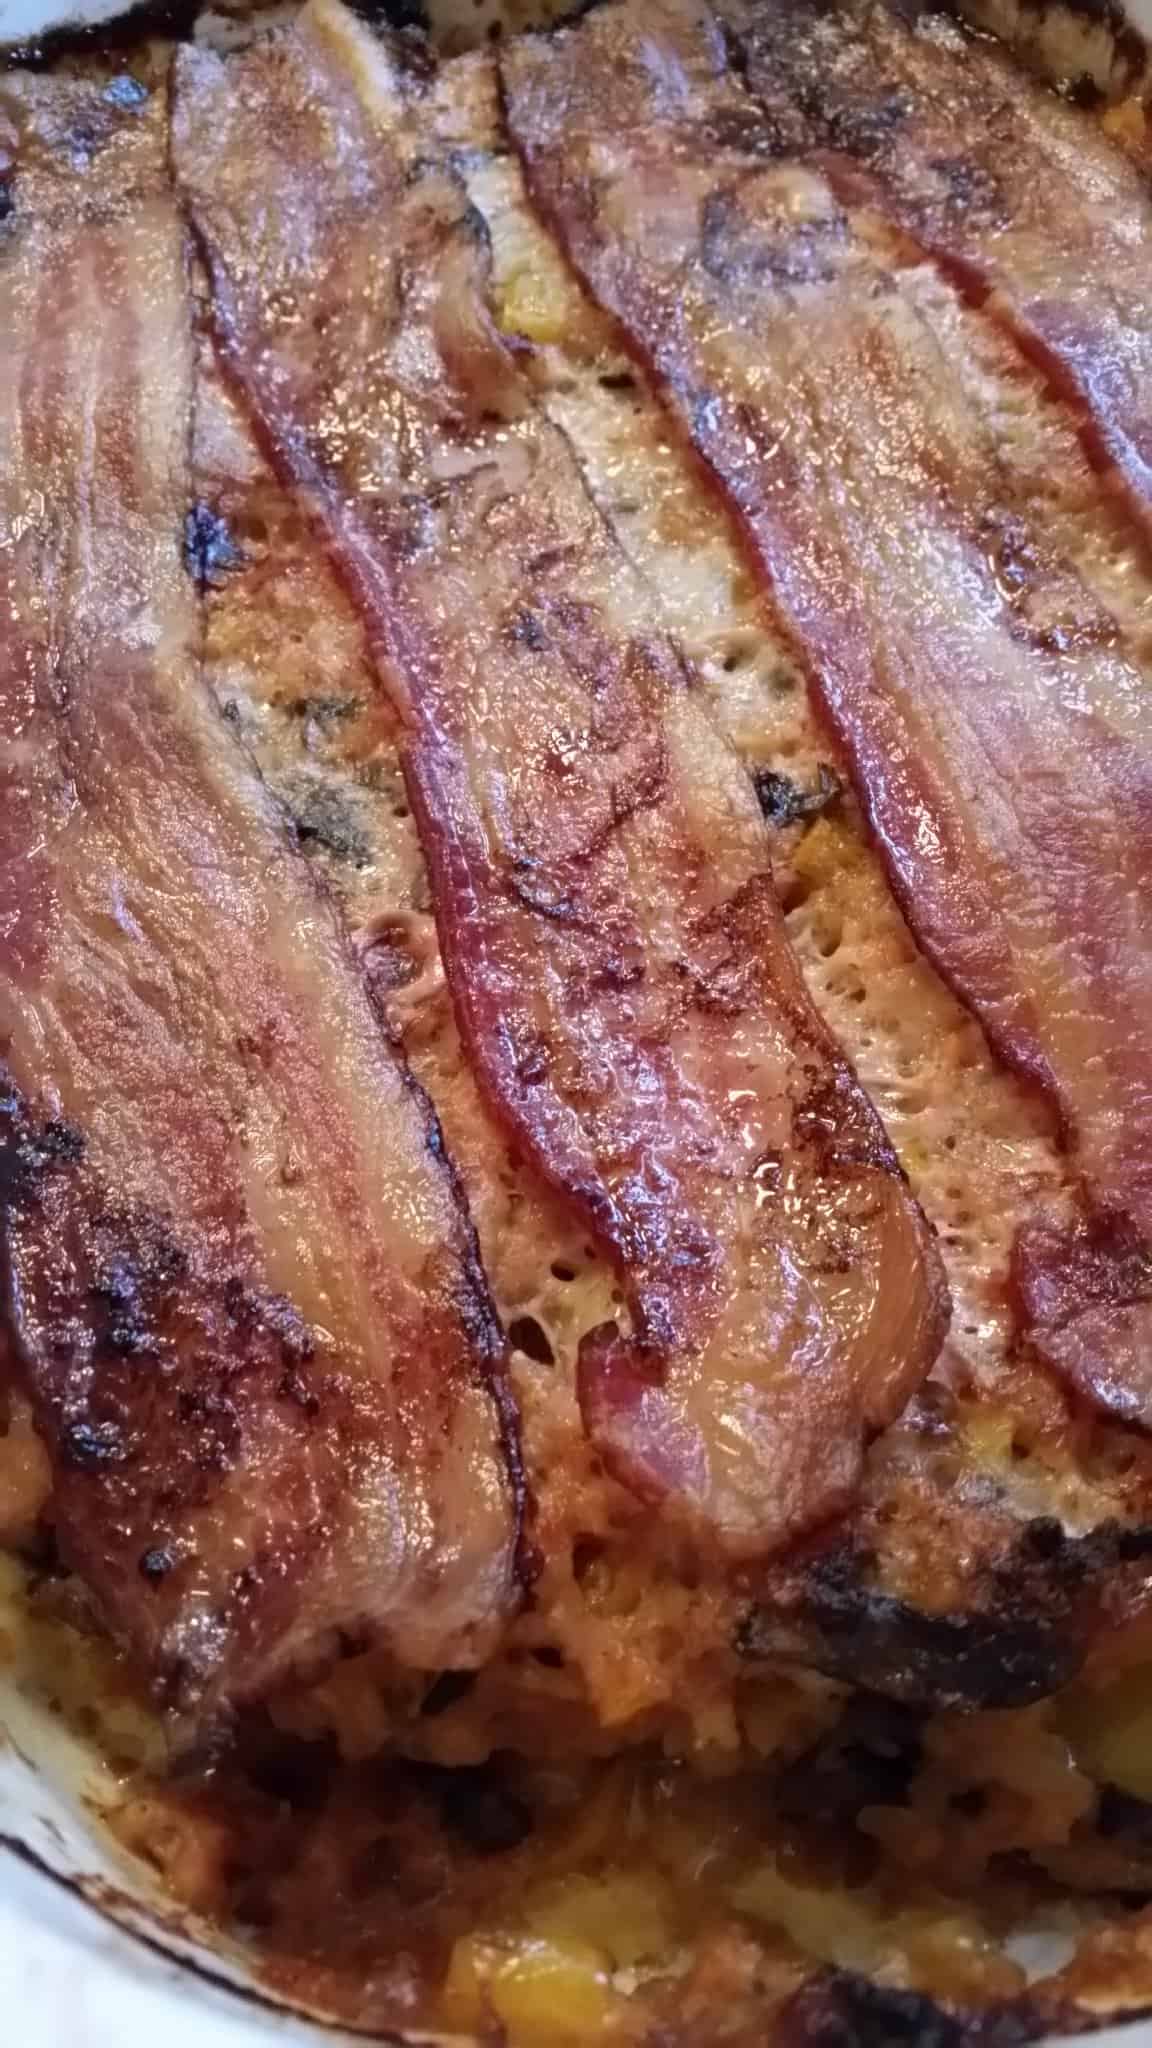 Veal Bacon Meatloaf